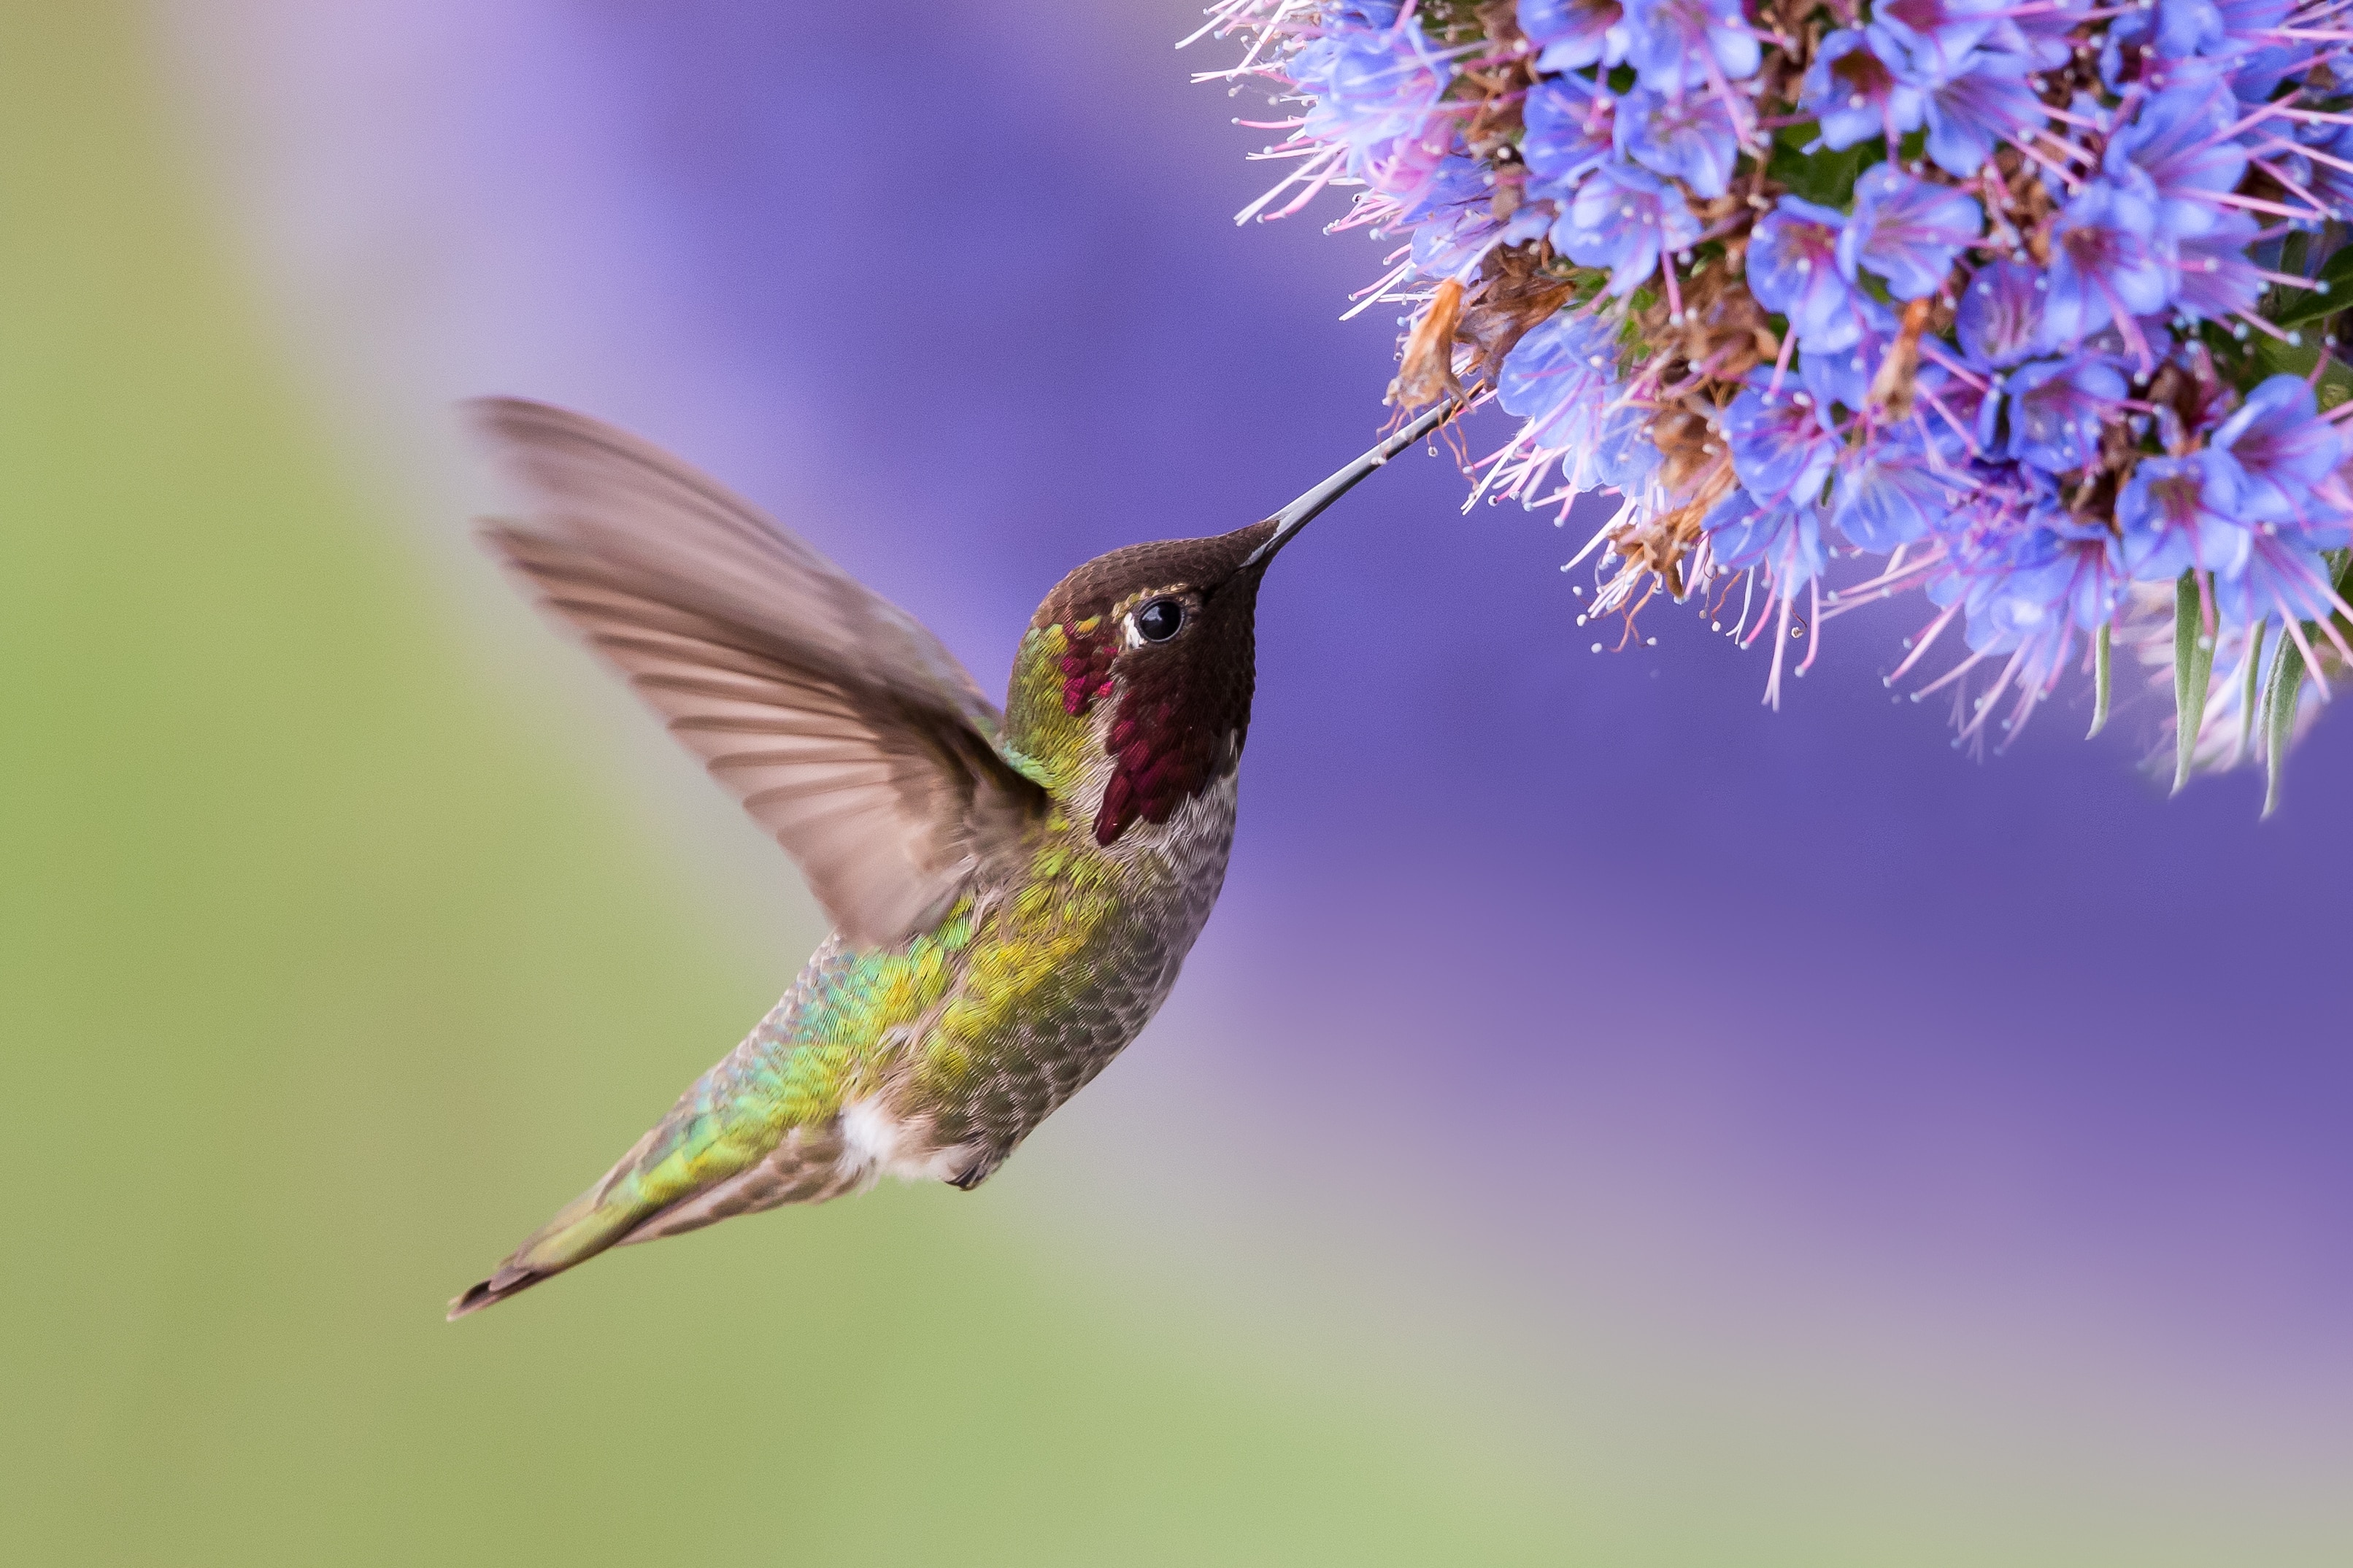 hummingbird feeding off of a plant